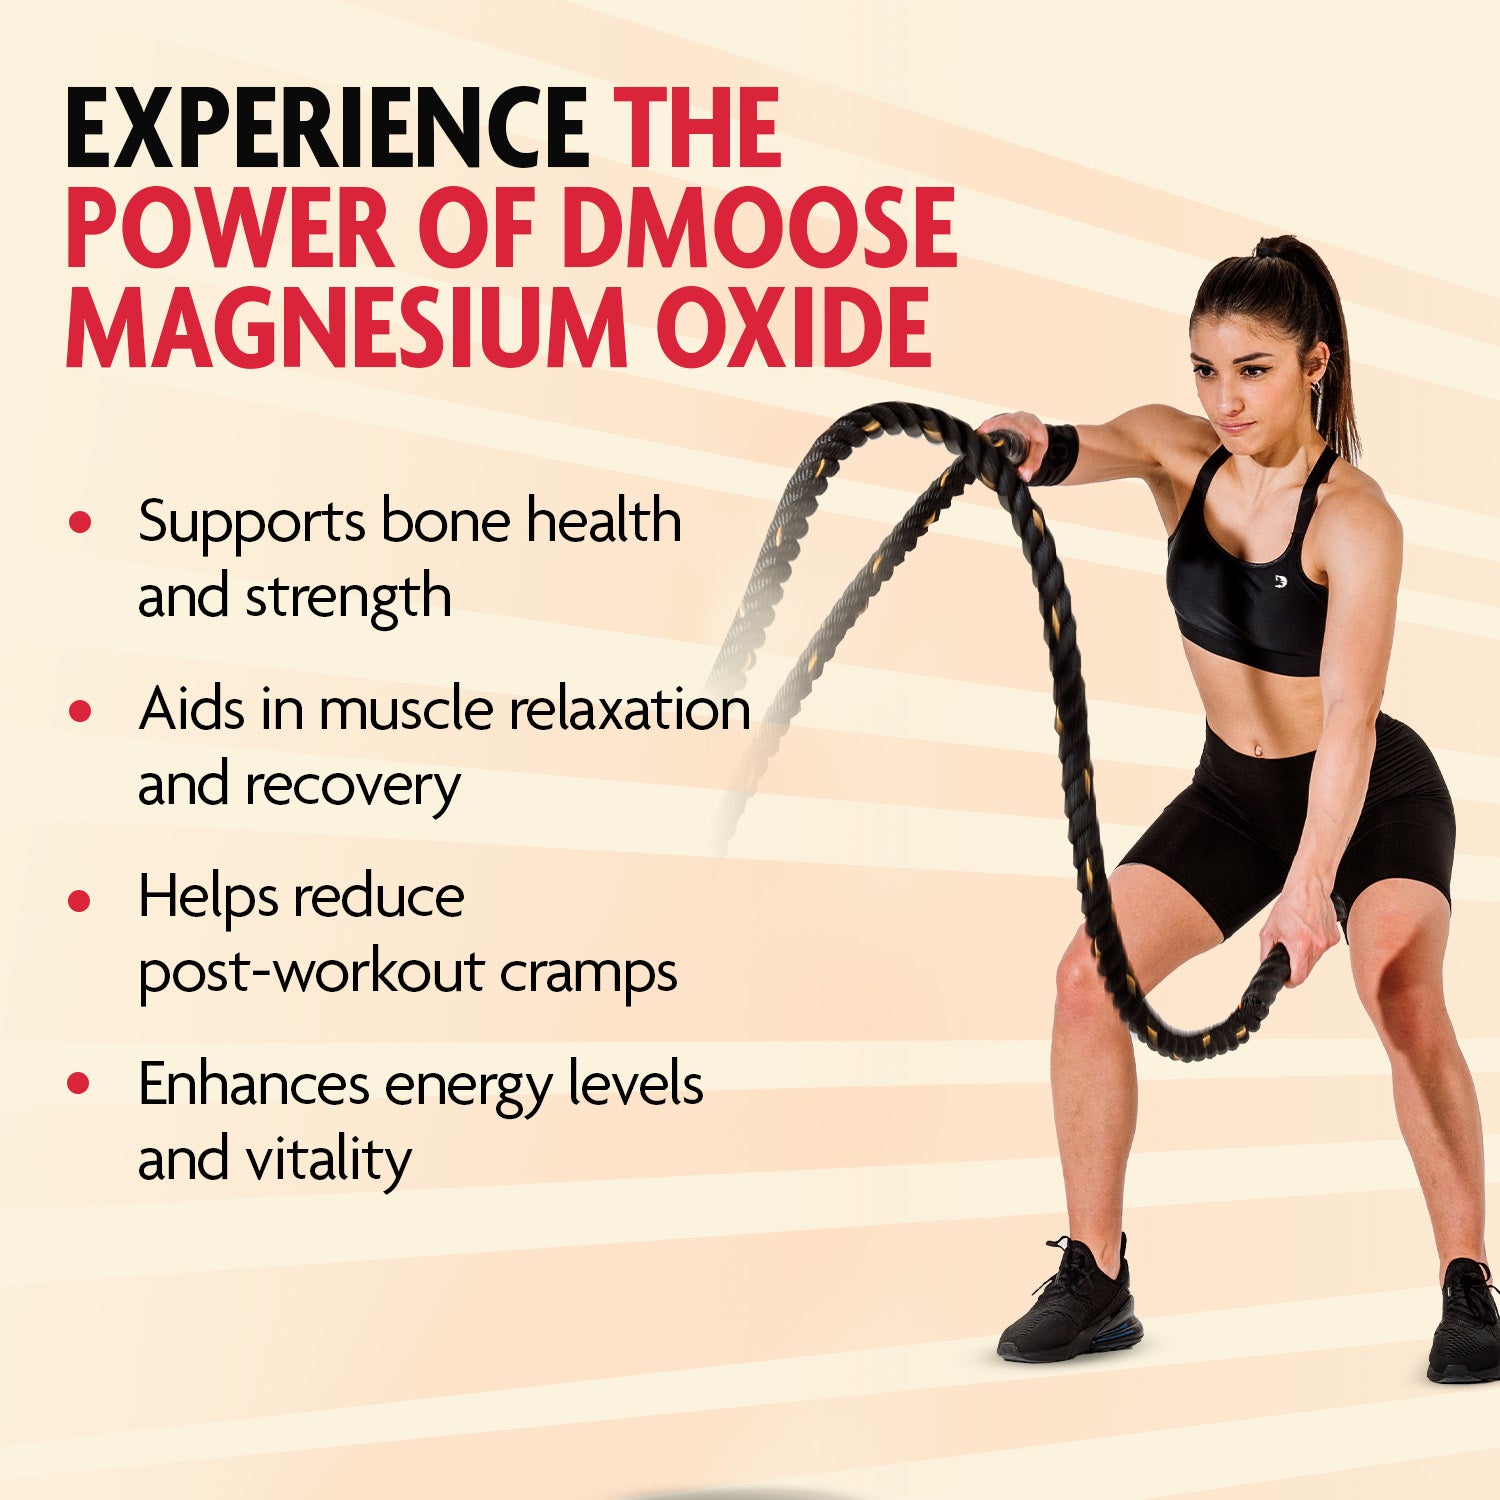 DMoose Magnesium 500 mg